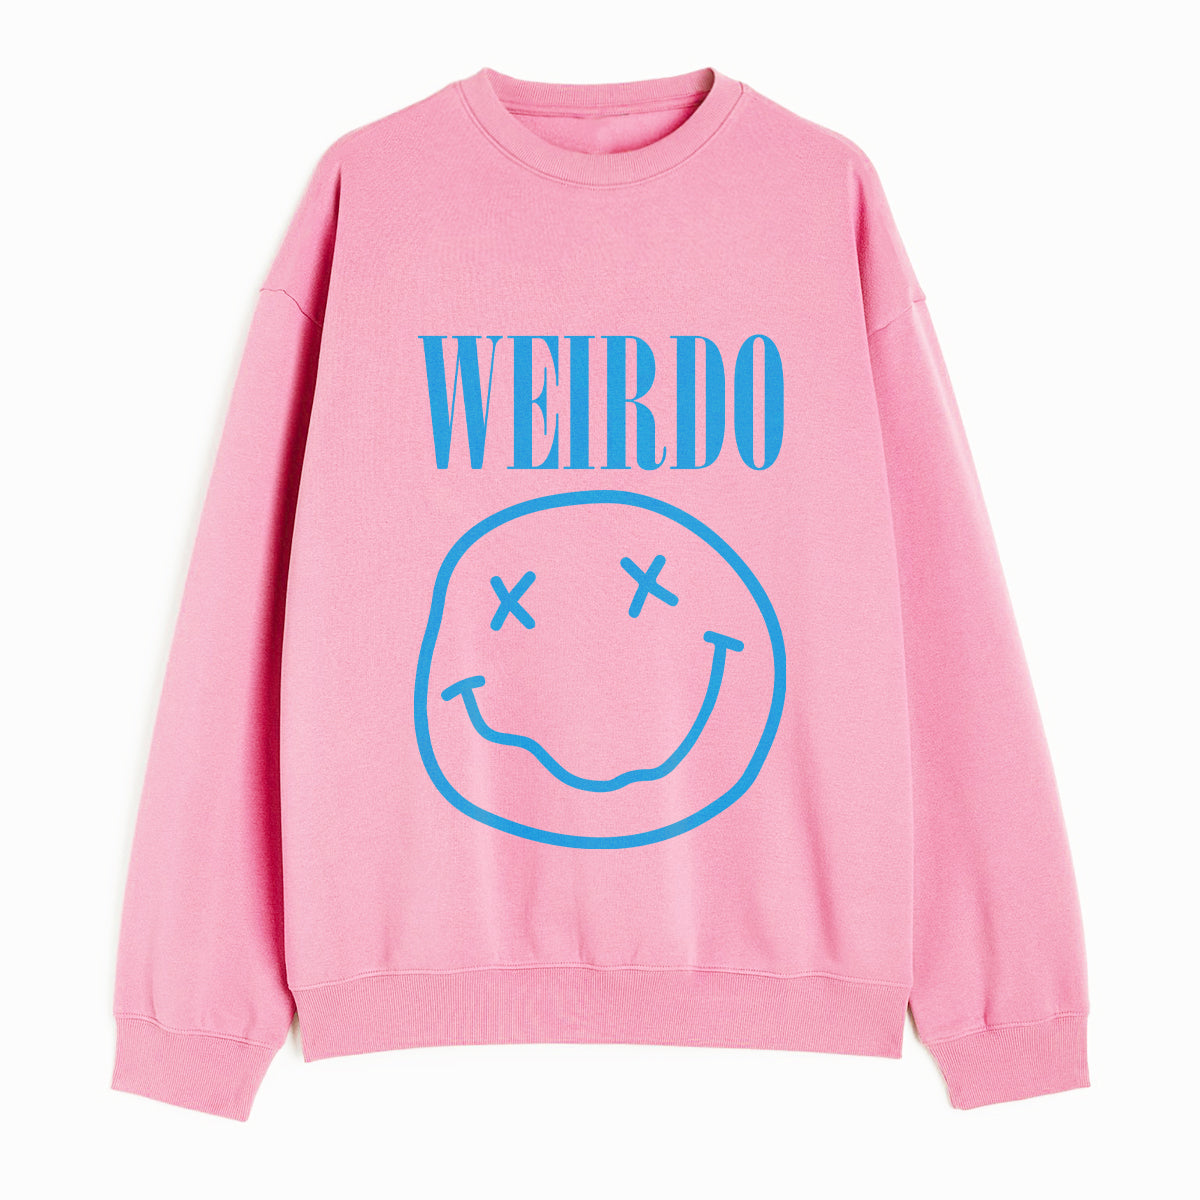 Weirdo Smiley Face Sweatshirt - Pink